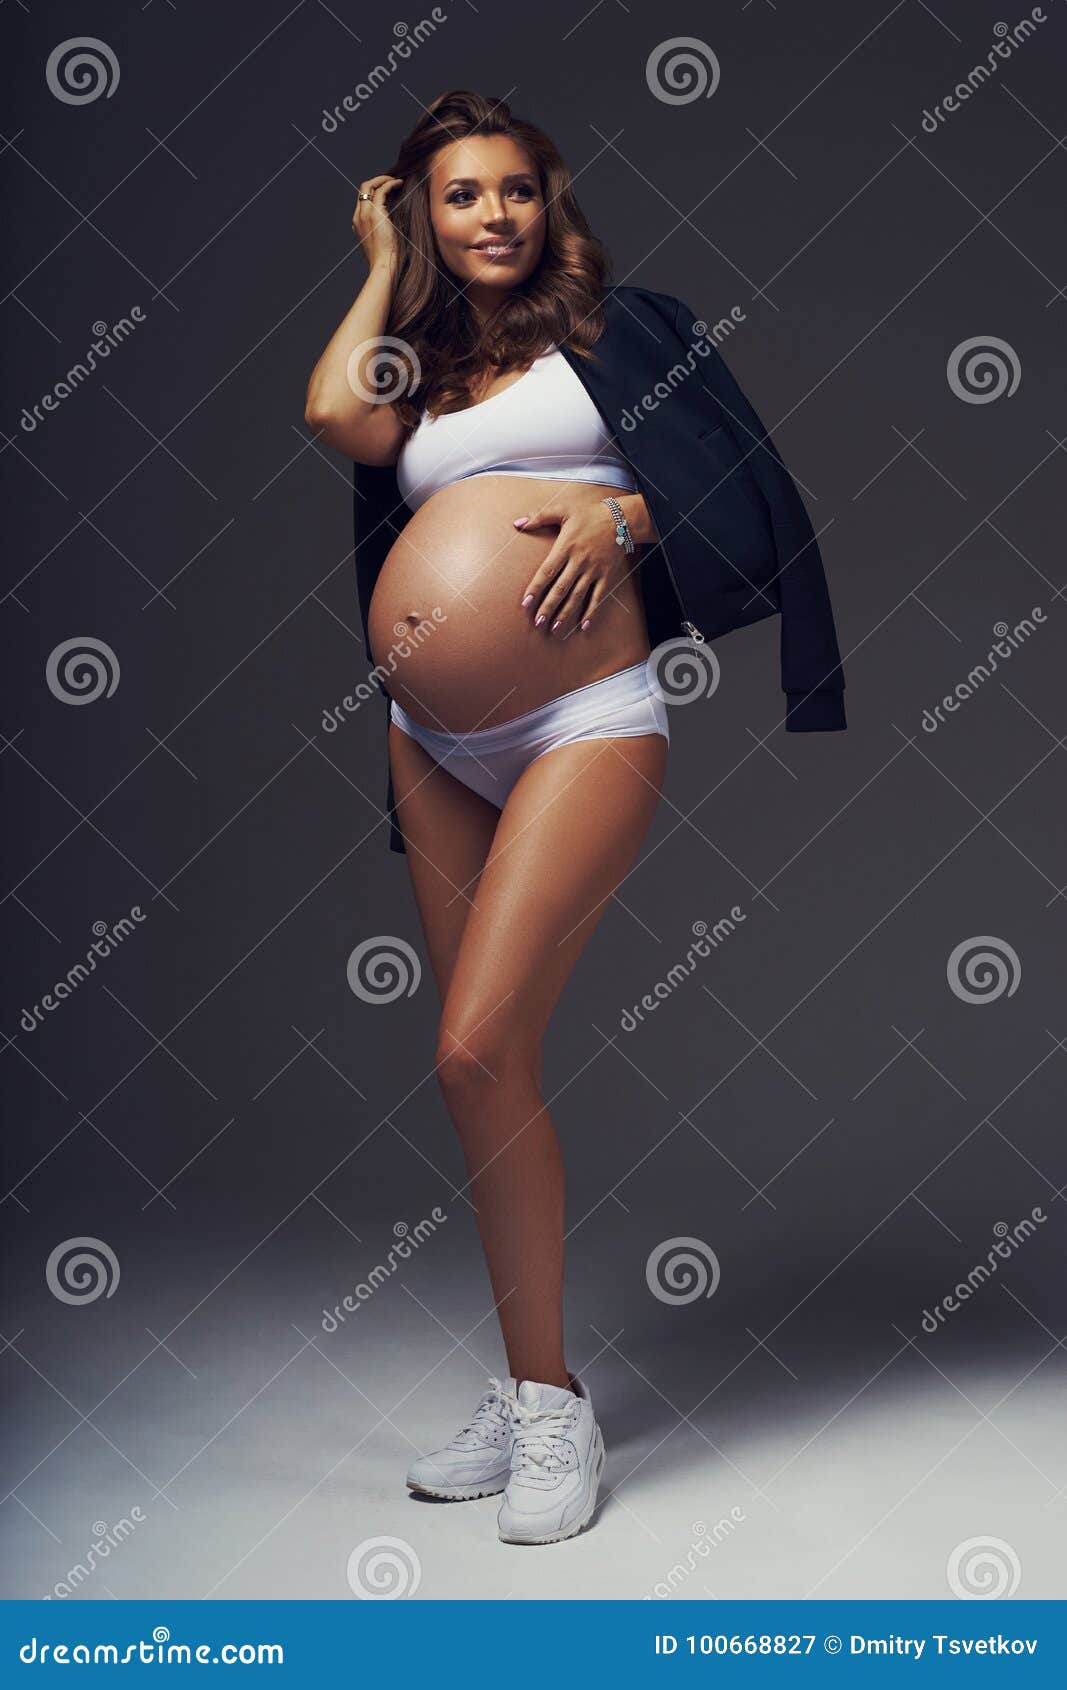 https://thumbs.dreamstime.com/z/pregnant-female-model-sports-underwear-standing-posing-full-body-portrait-attractive-smiling-pregnant-brunette-woman-100668827.jpg